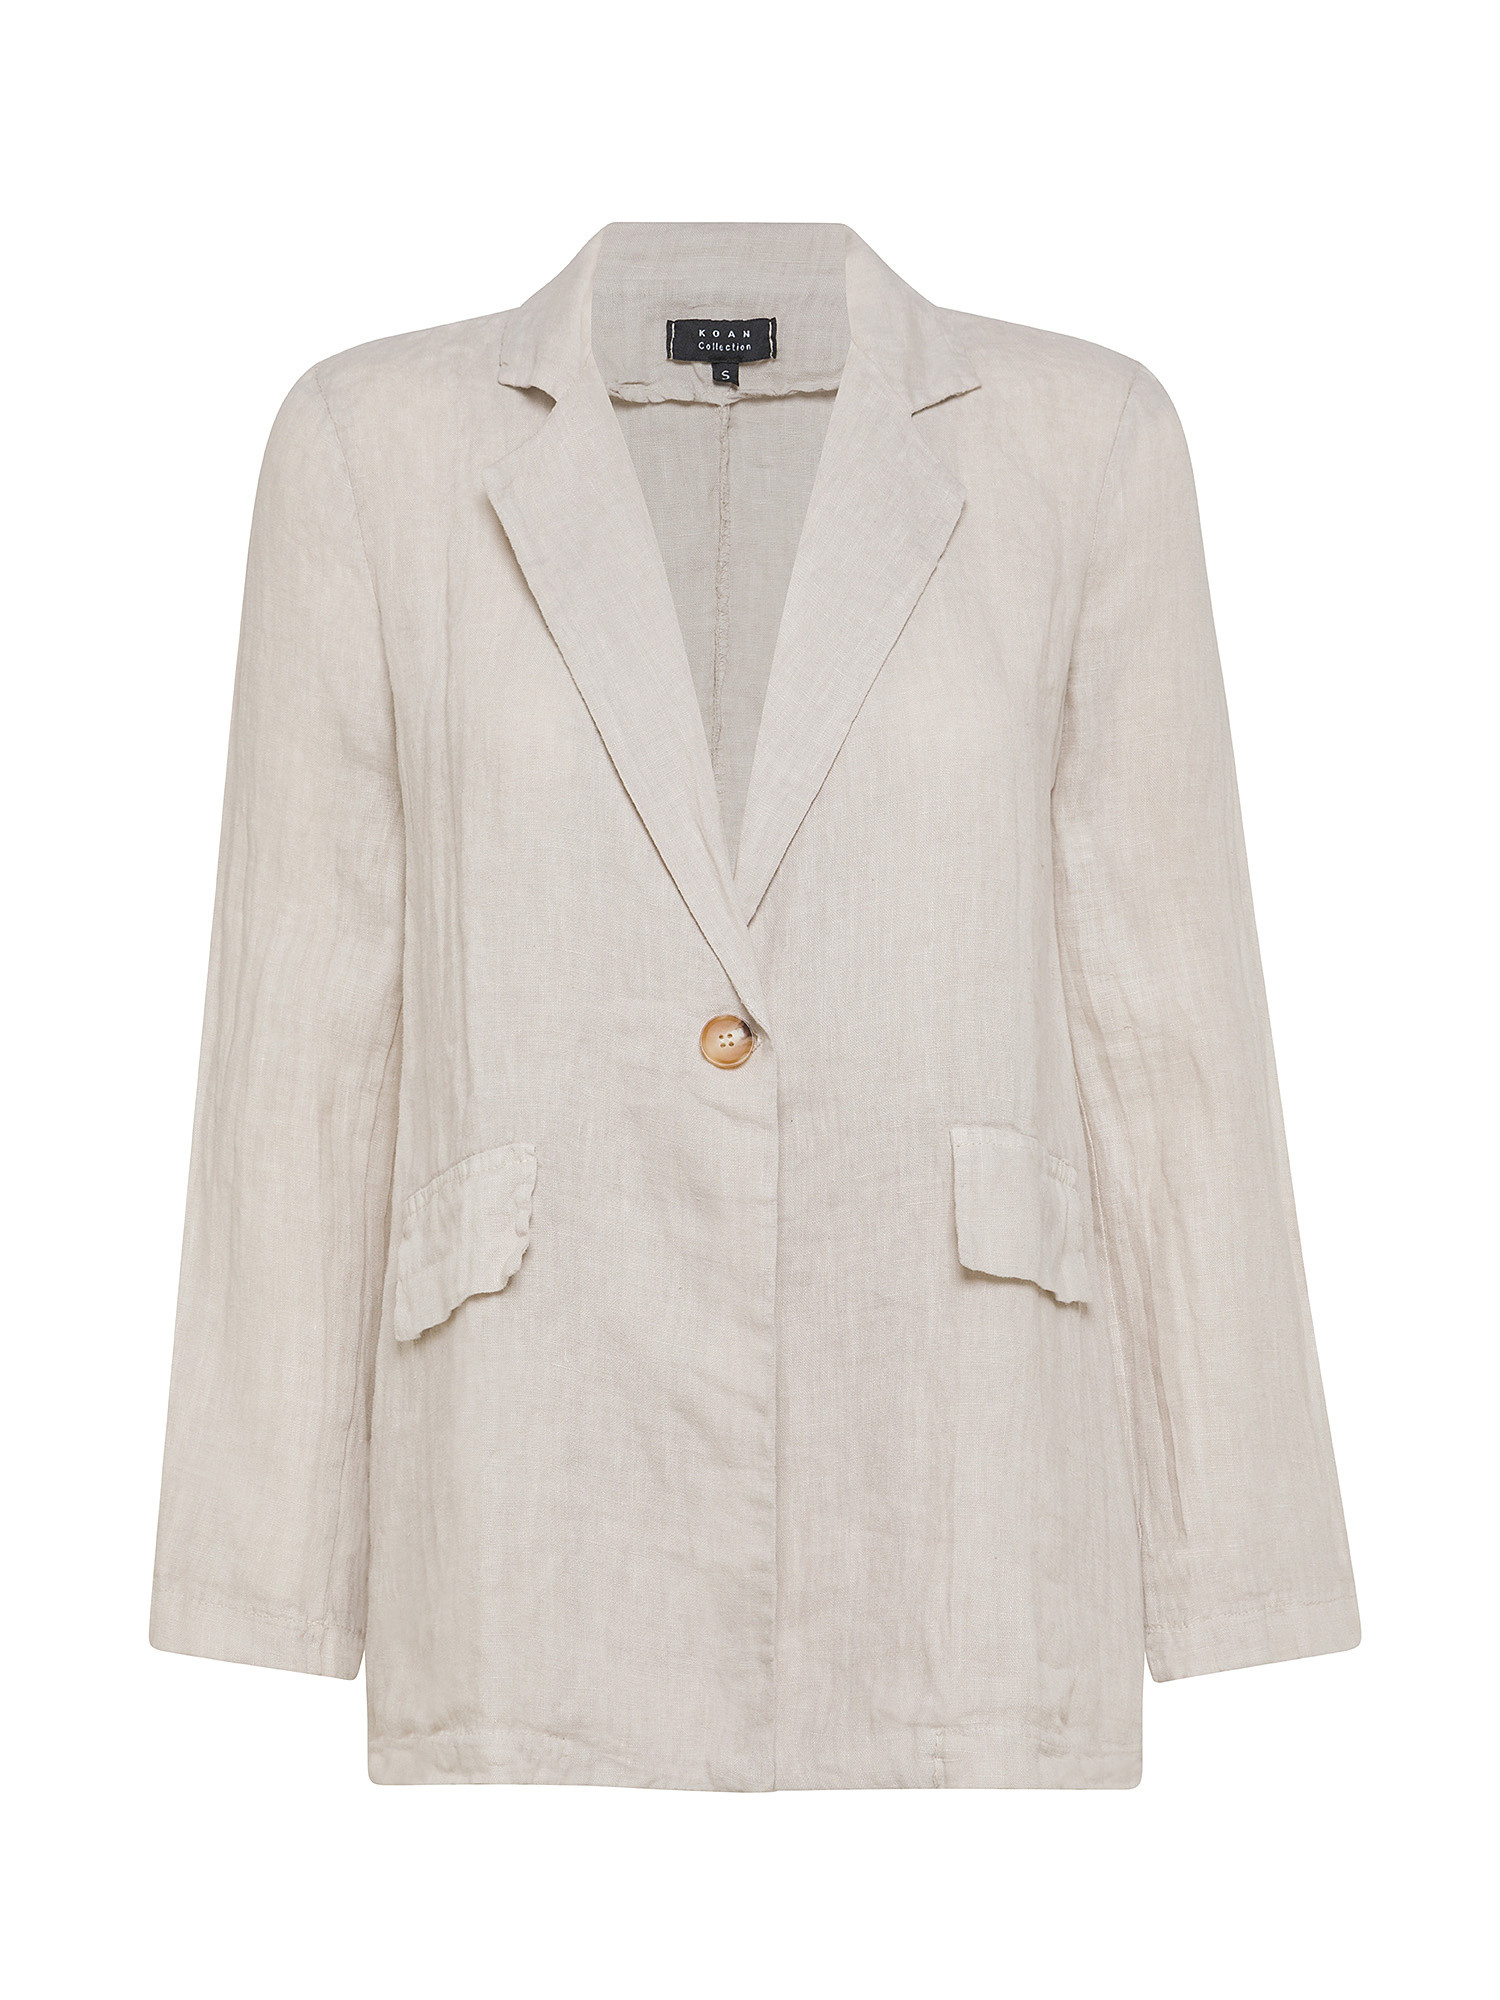 Koan - Classic linen jacket, Beige, large image number 0